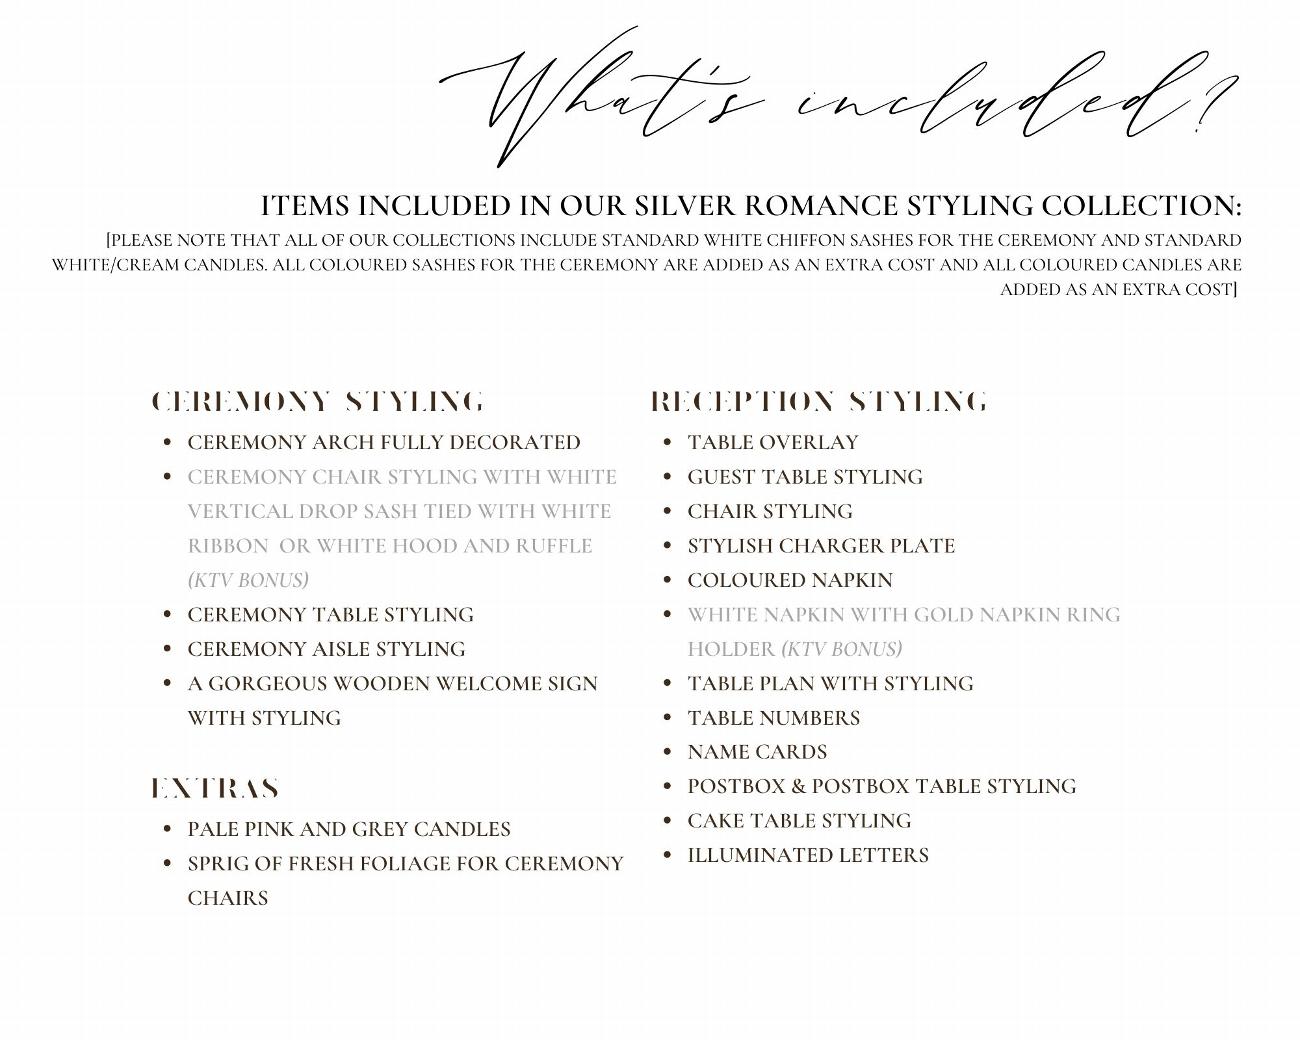 Silver Romance Collection | KTV Venue Stylists Ltd gallery image 9